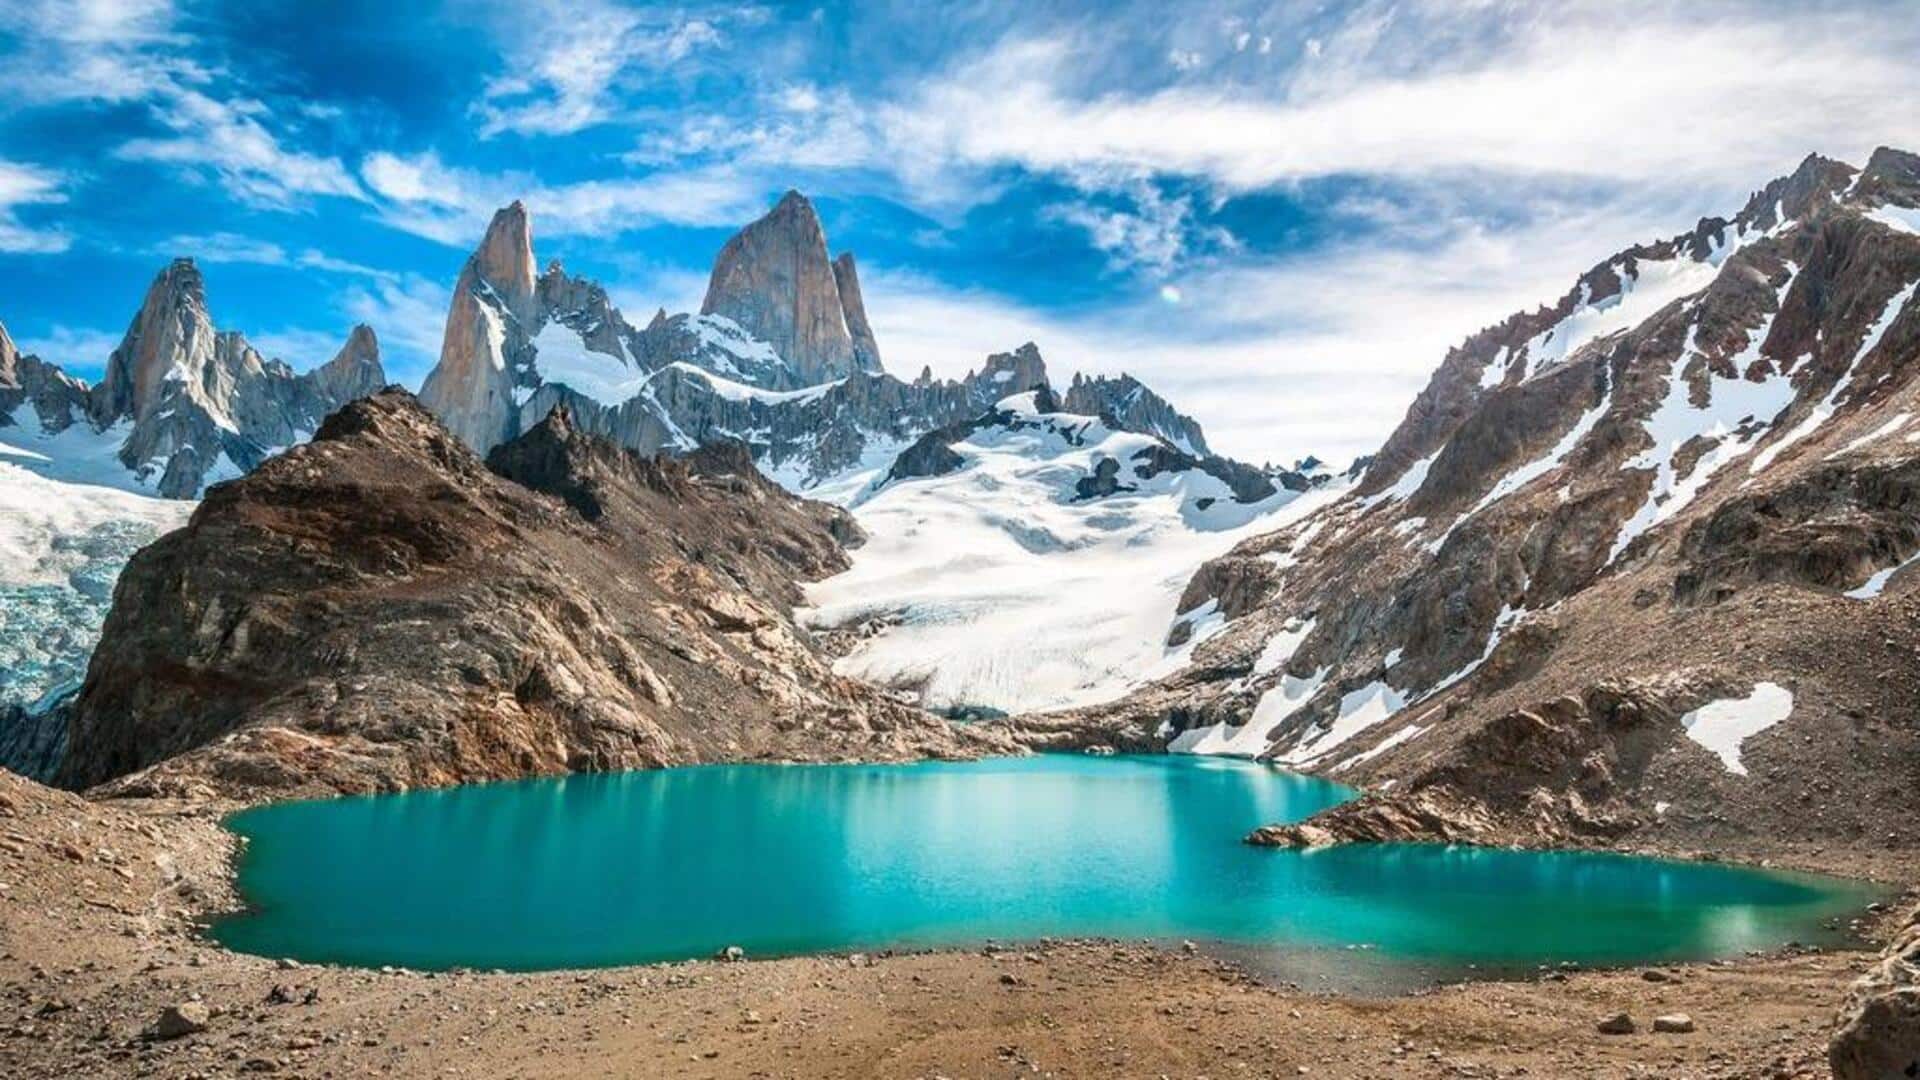 Exploring the many wonders of Patagonia